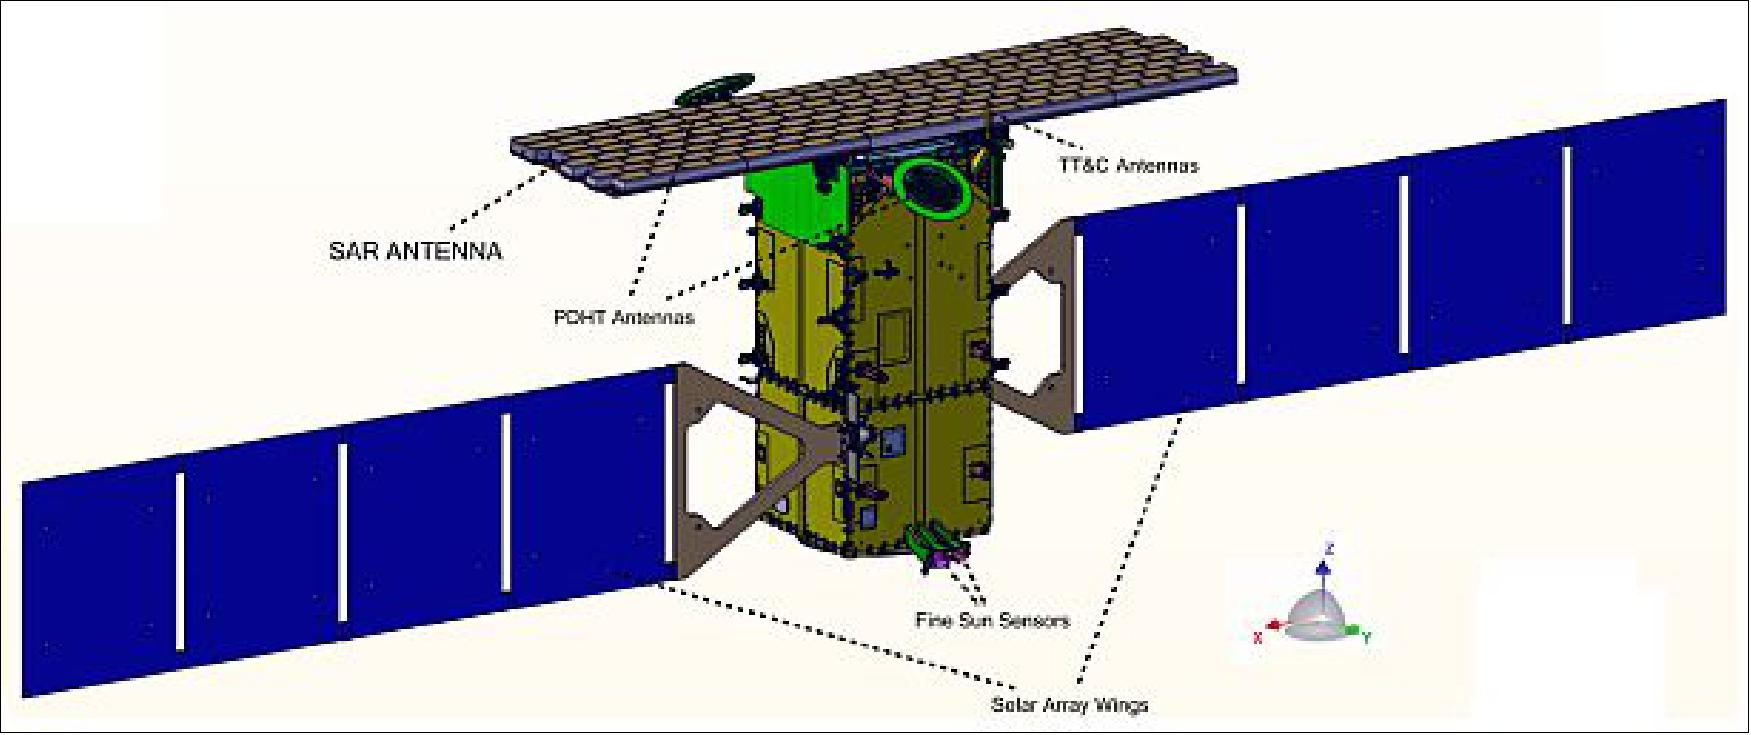 Figure 2: The satellite architecture in deployed configuration (image credit: TAS-I)